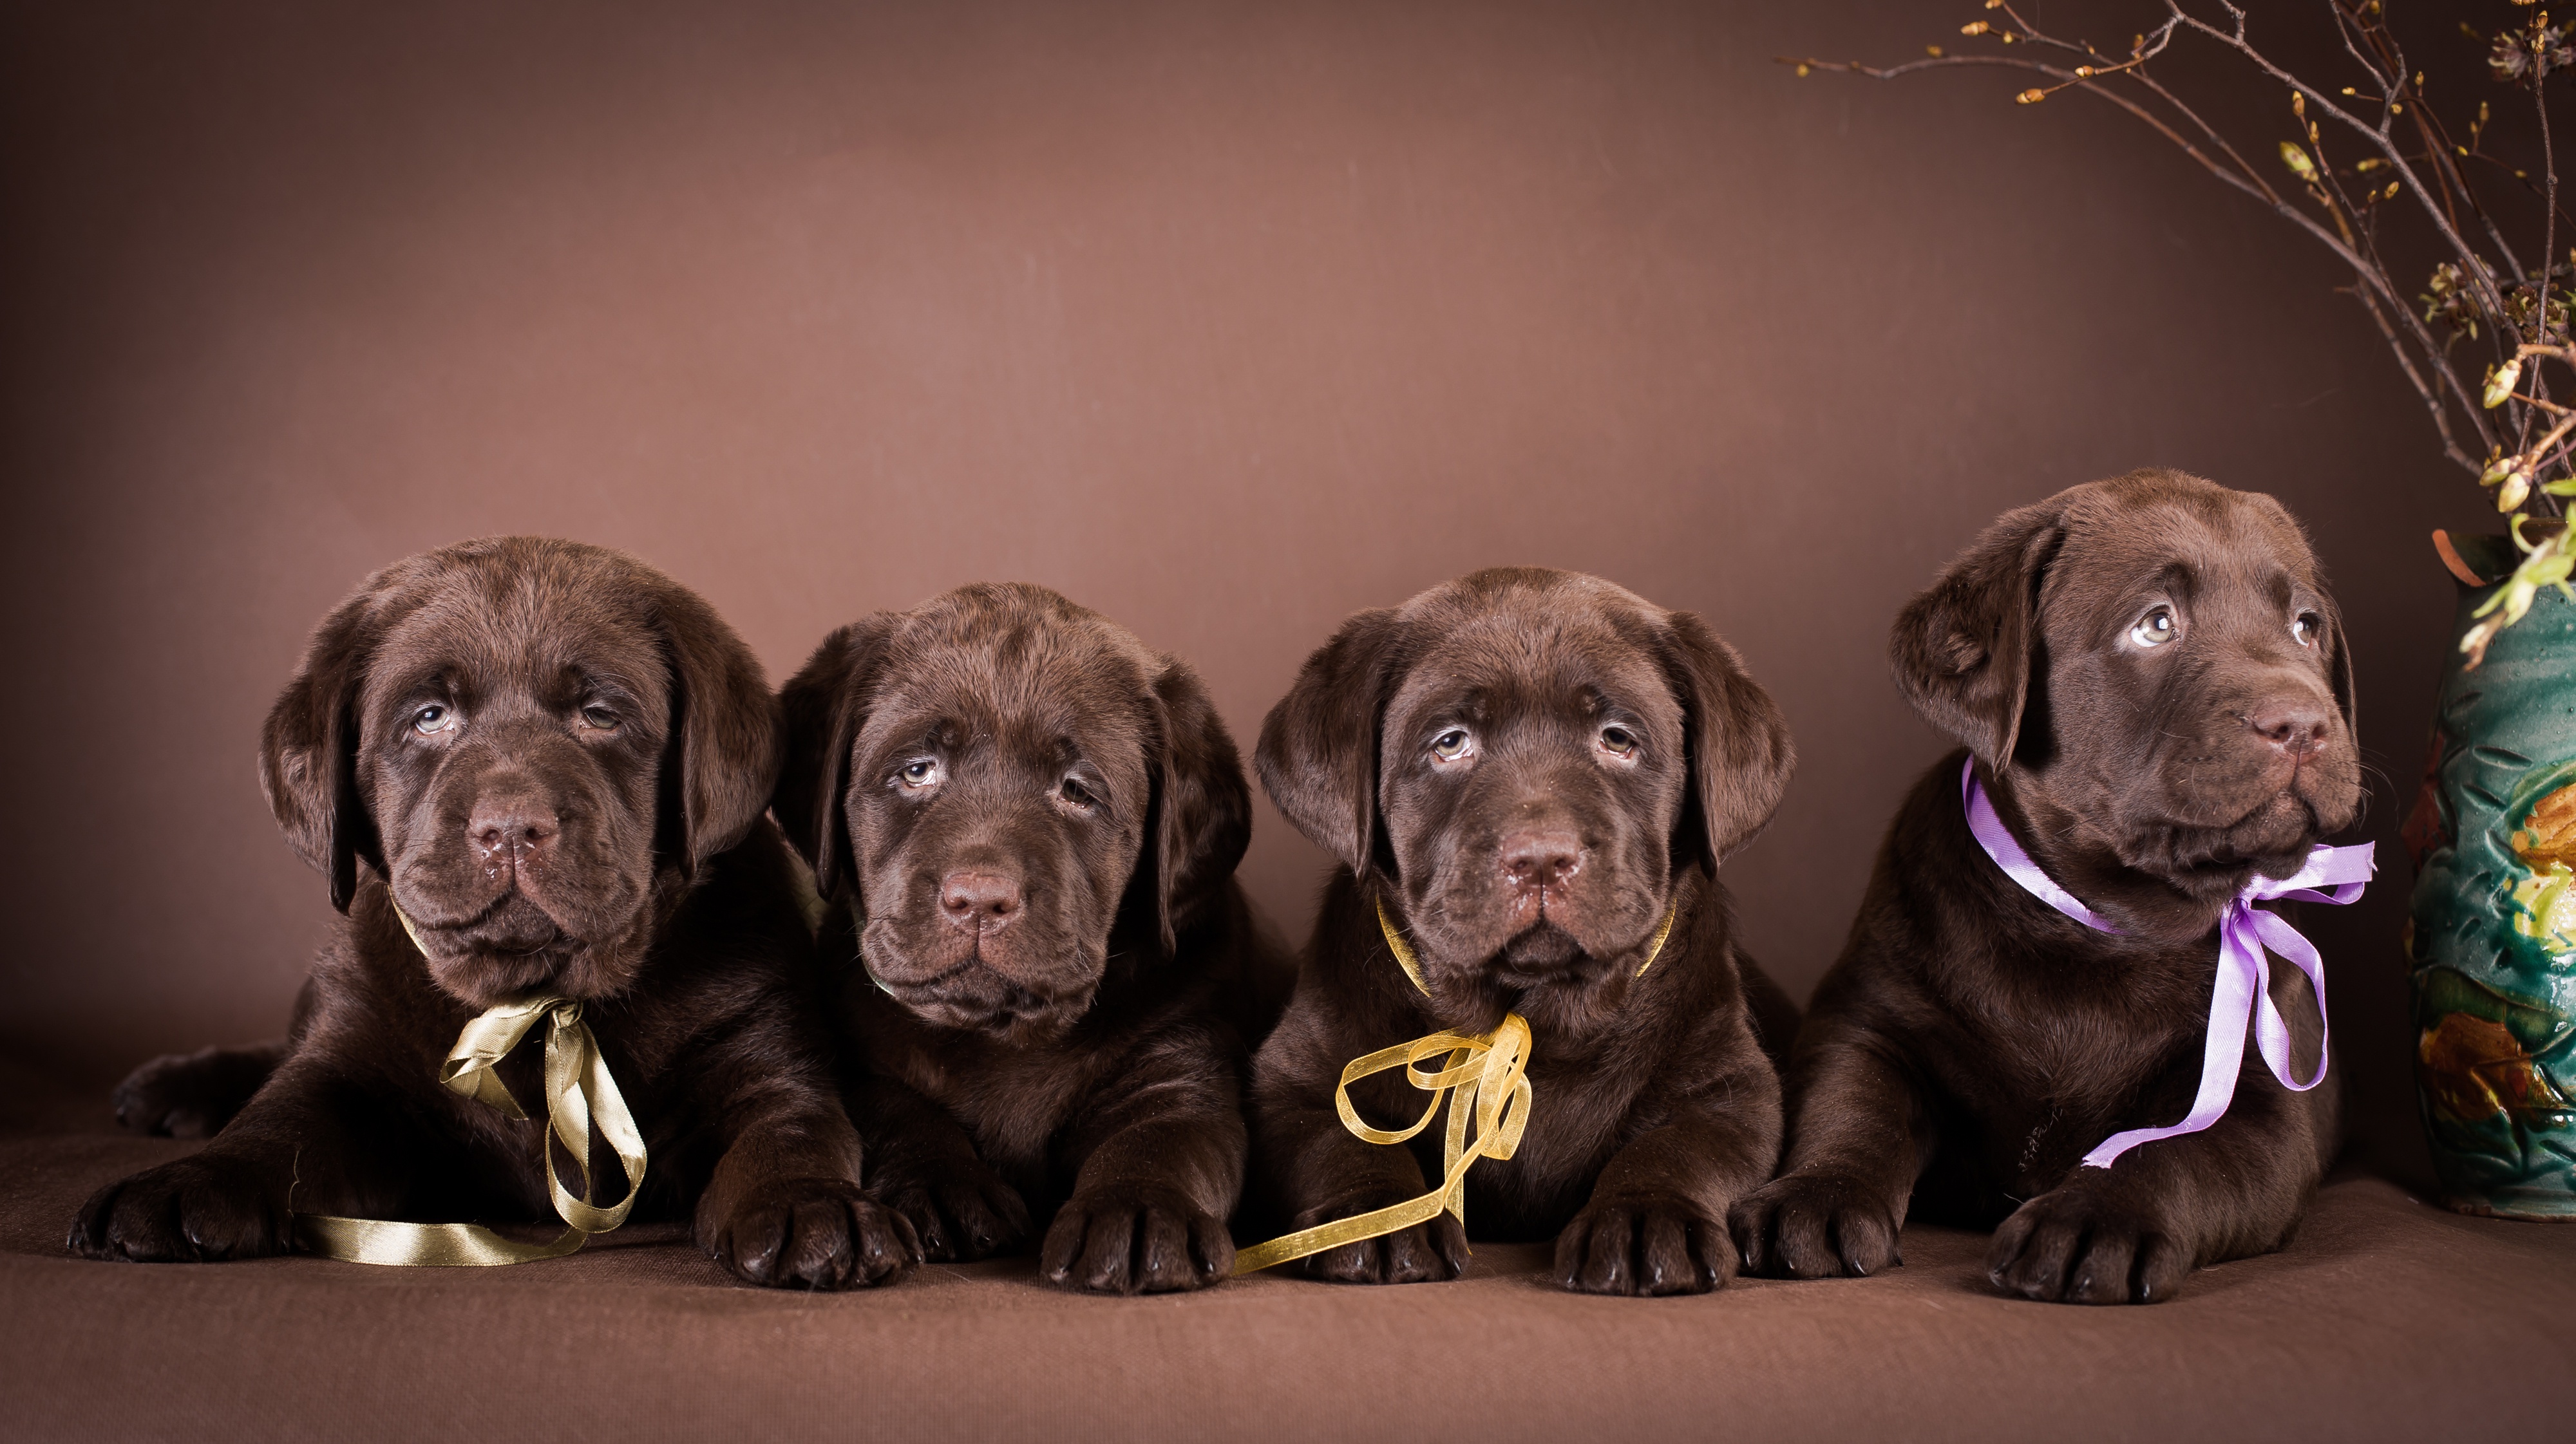 Baby Animal Chocolate Labrador Dog Labrador Pet Puppy 4000x2243